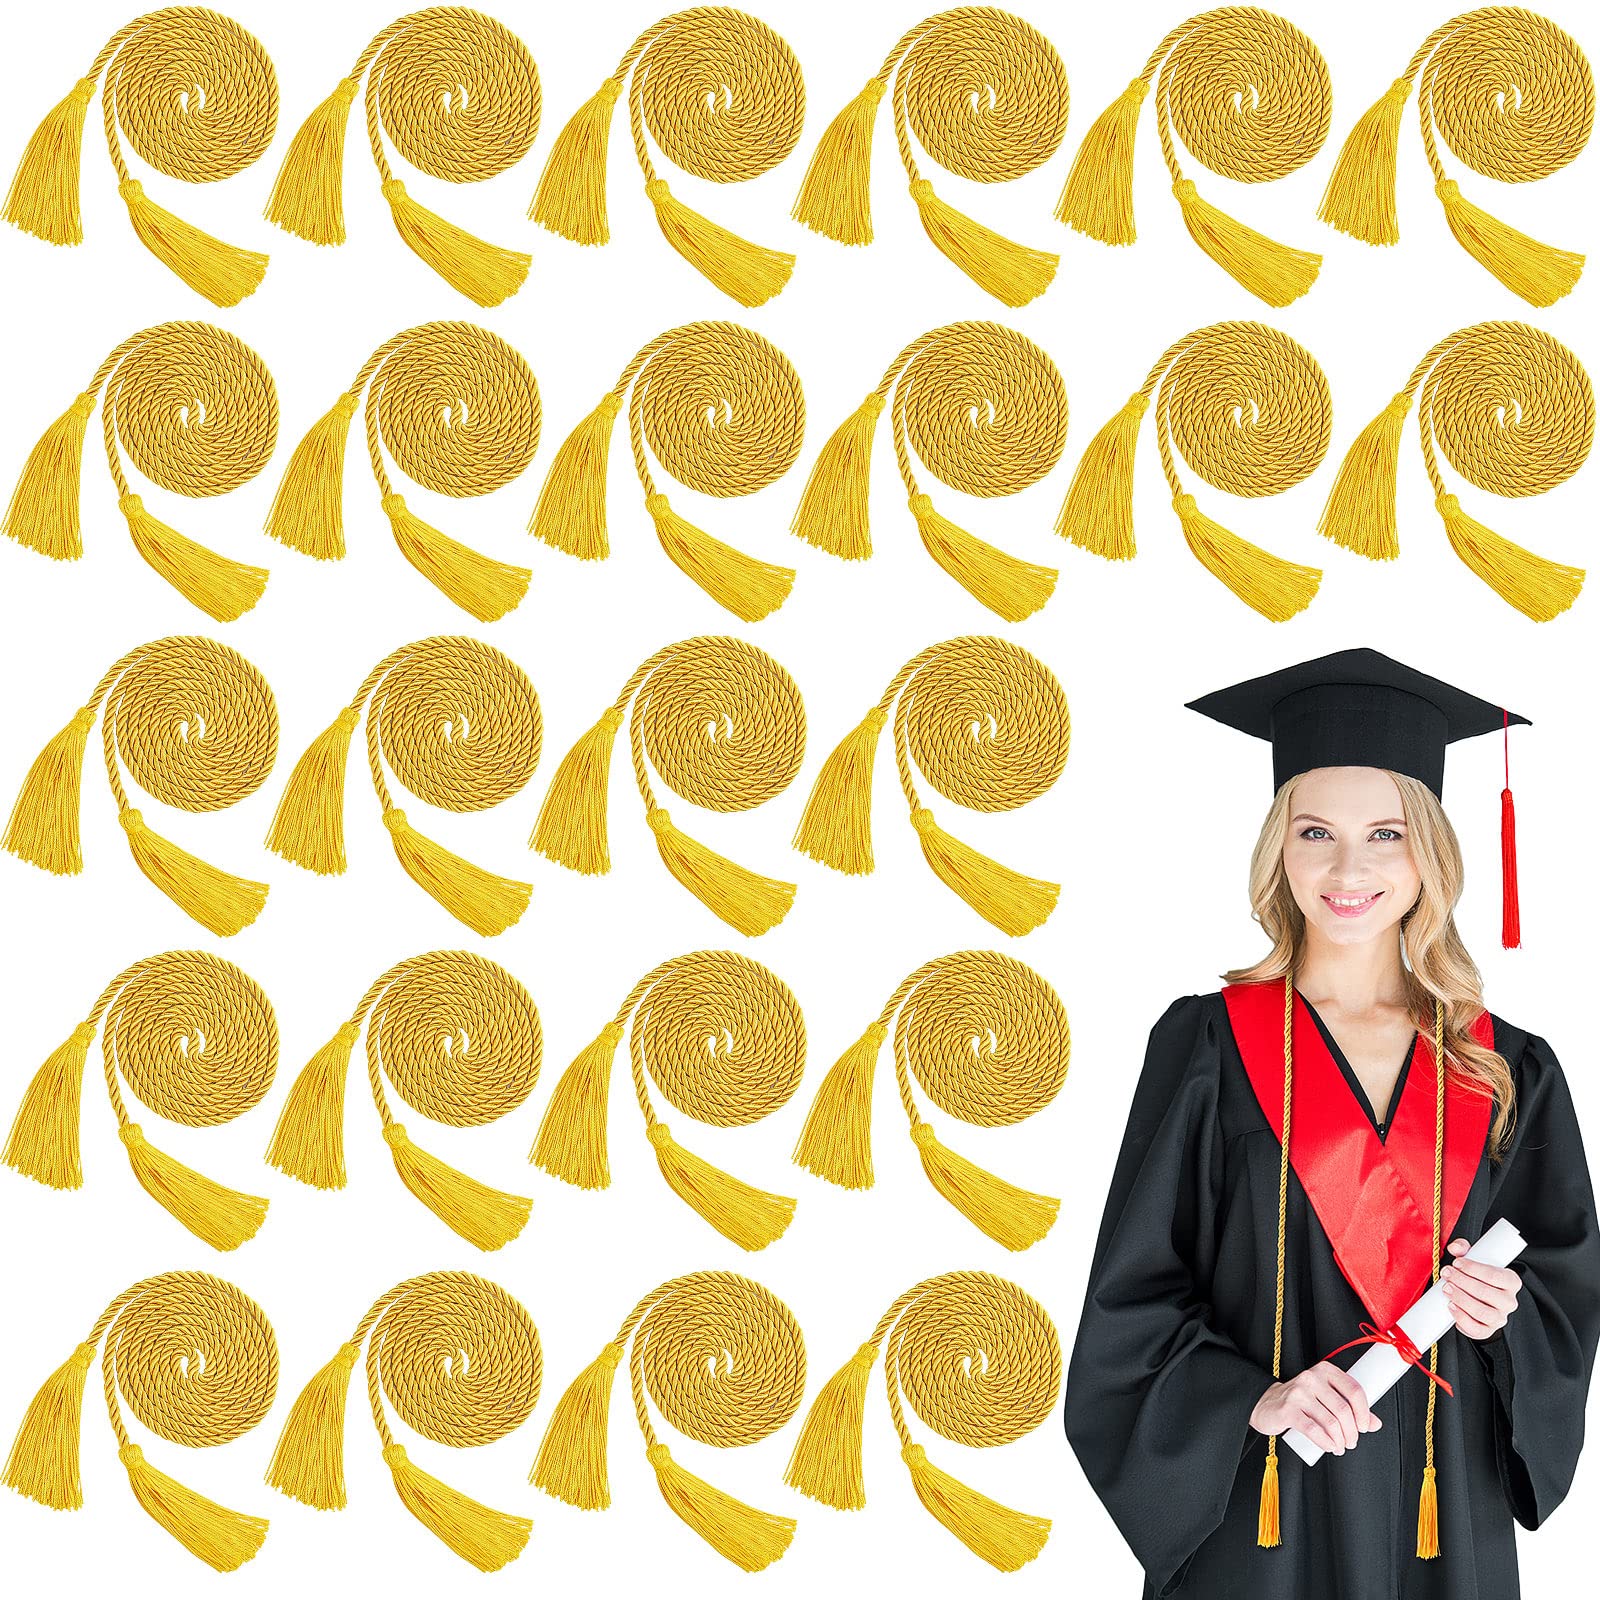 Gold Graduation Cords